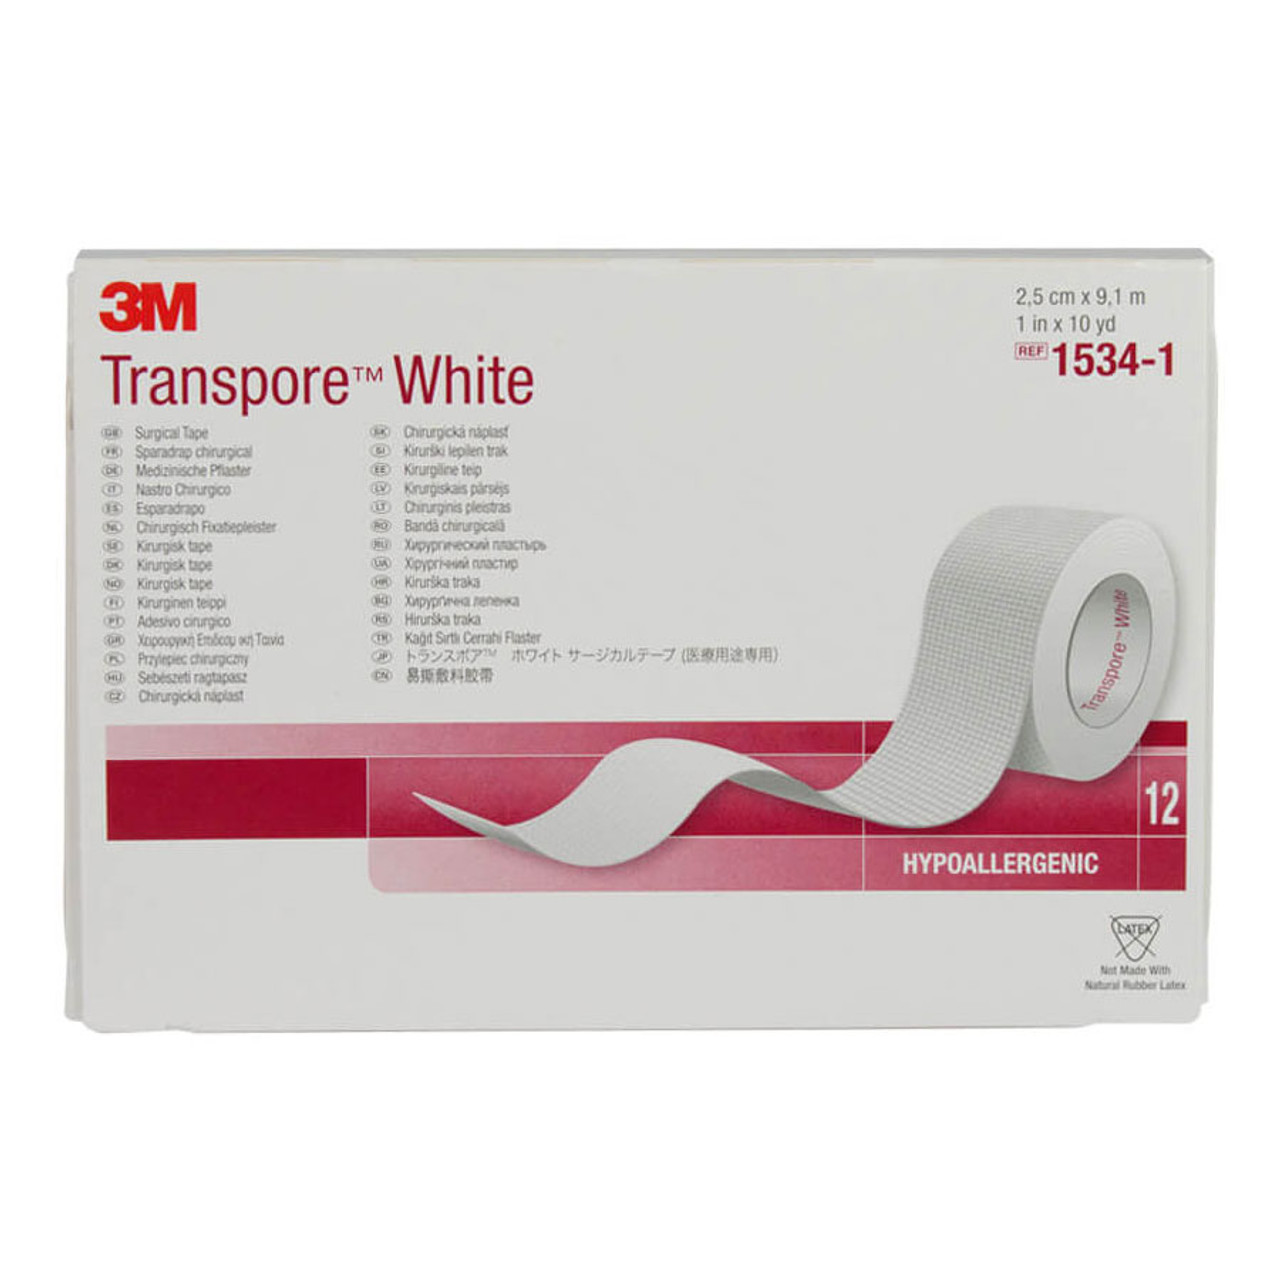 Paper Tape 1/2 24 Rolls/box  Medical Supplies & Equipment